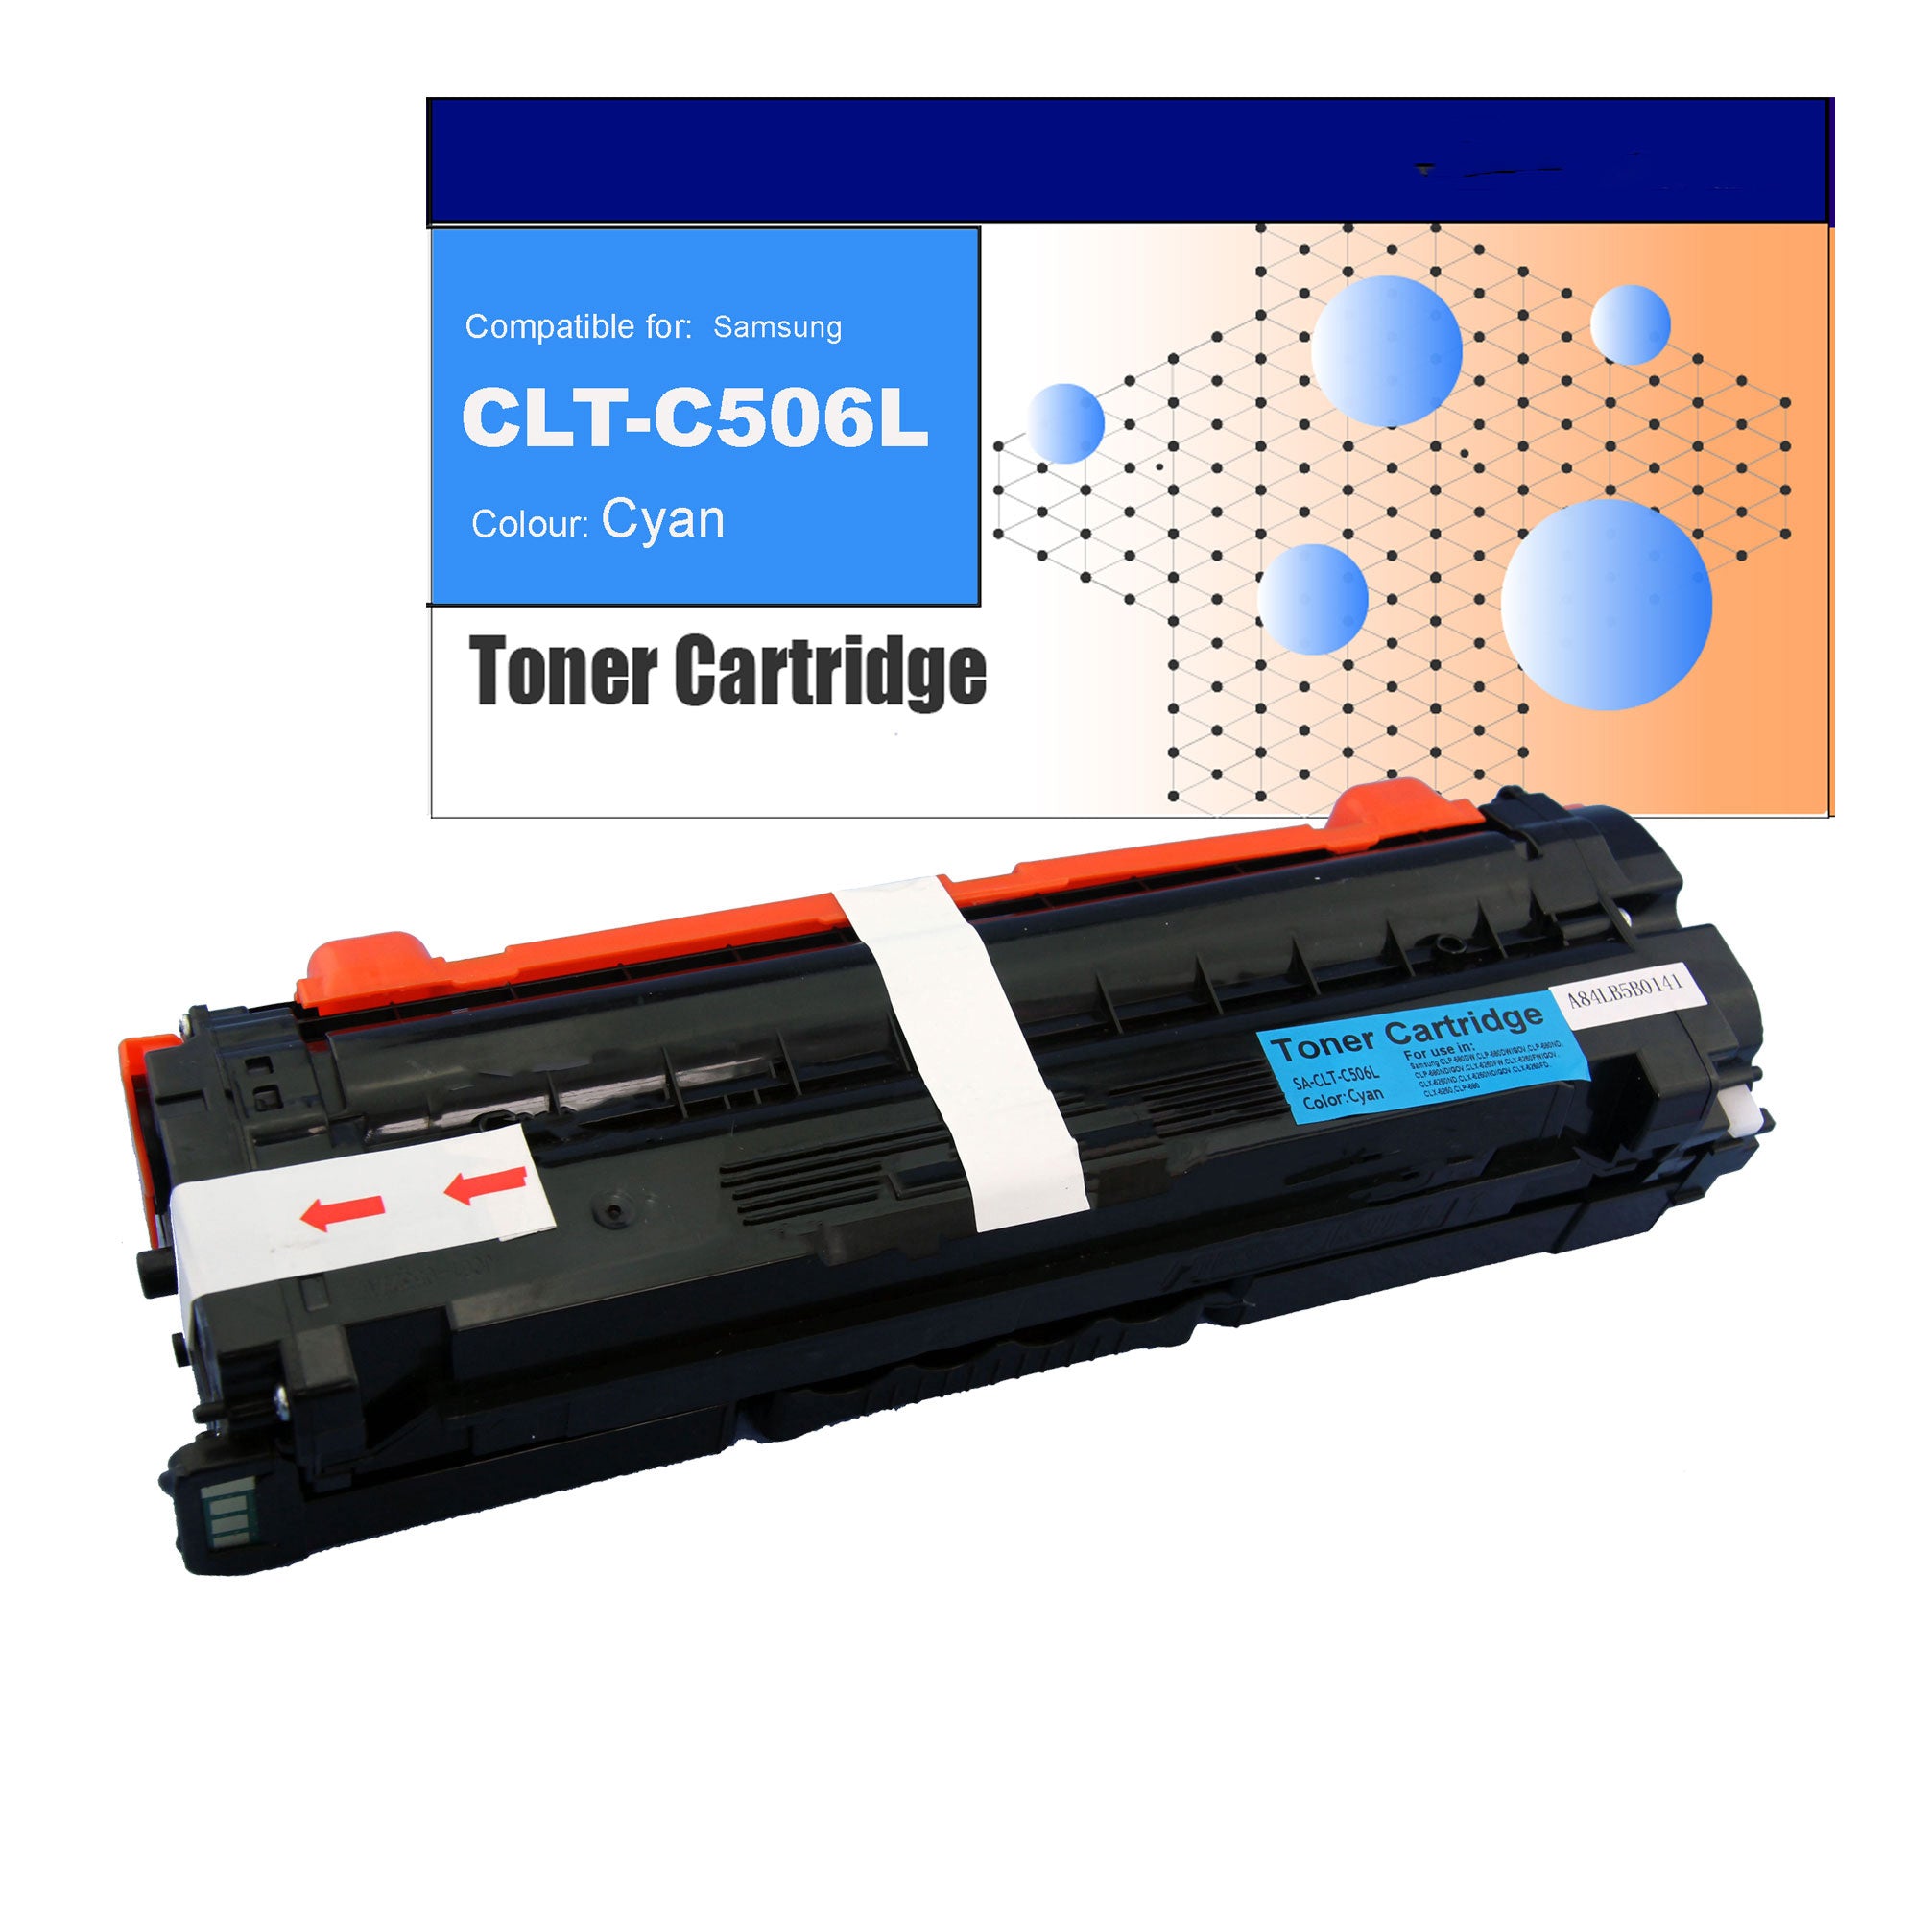 Compatible Toner for Samsung CLT-C506L Cyan Toner Cartridges